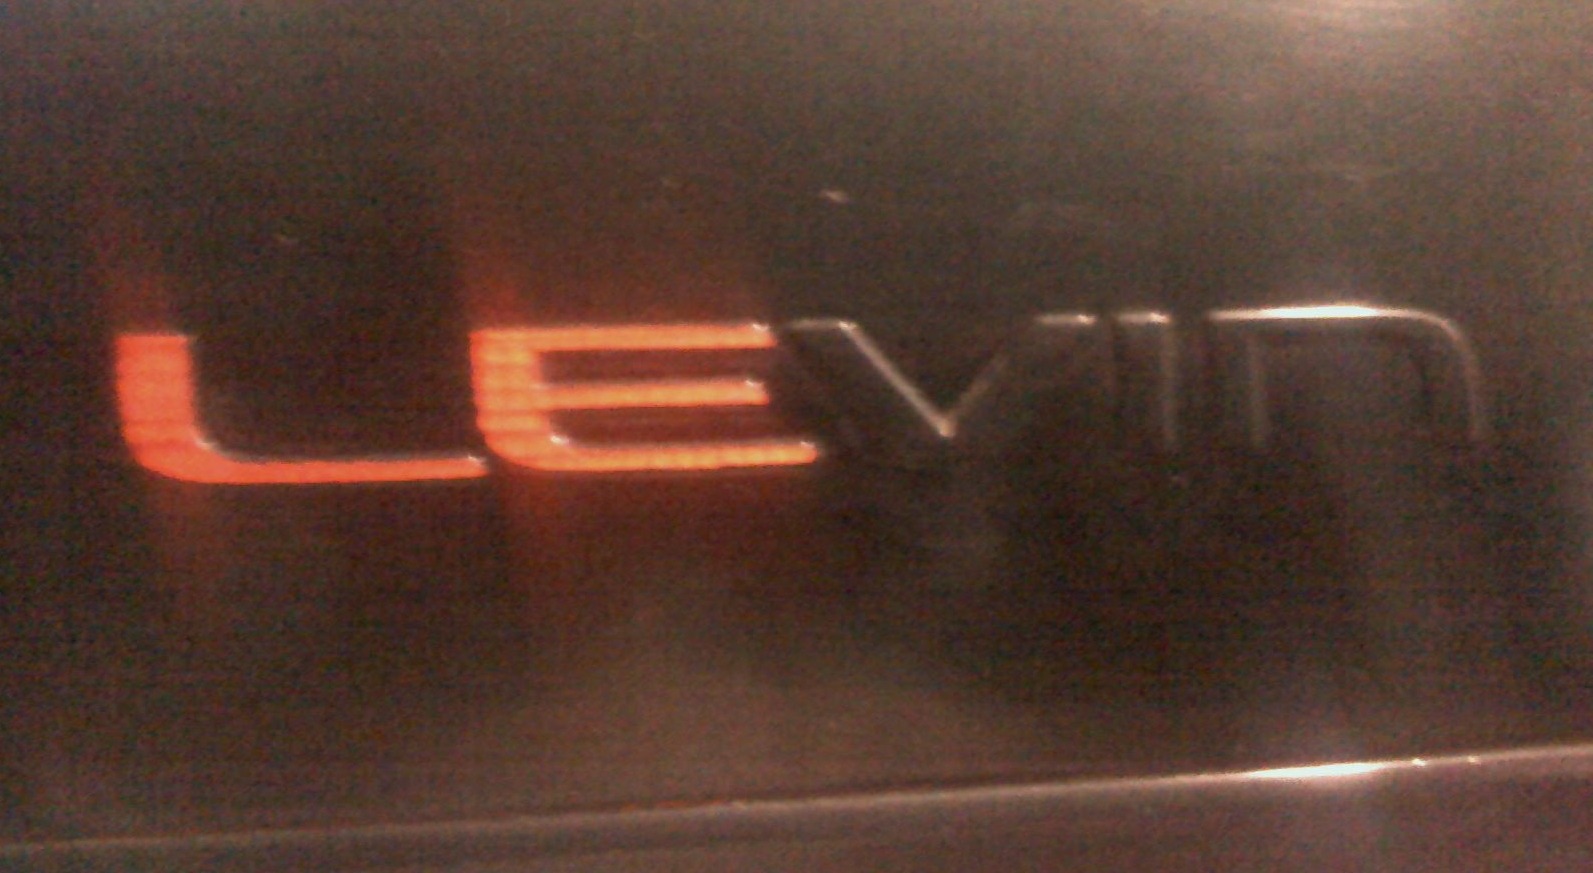    Toyota Corolla Levin 16 1993